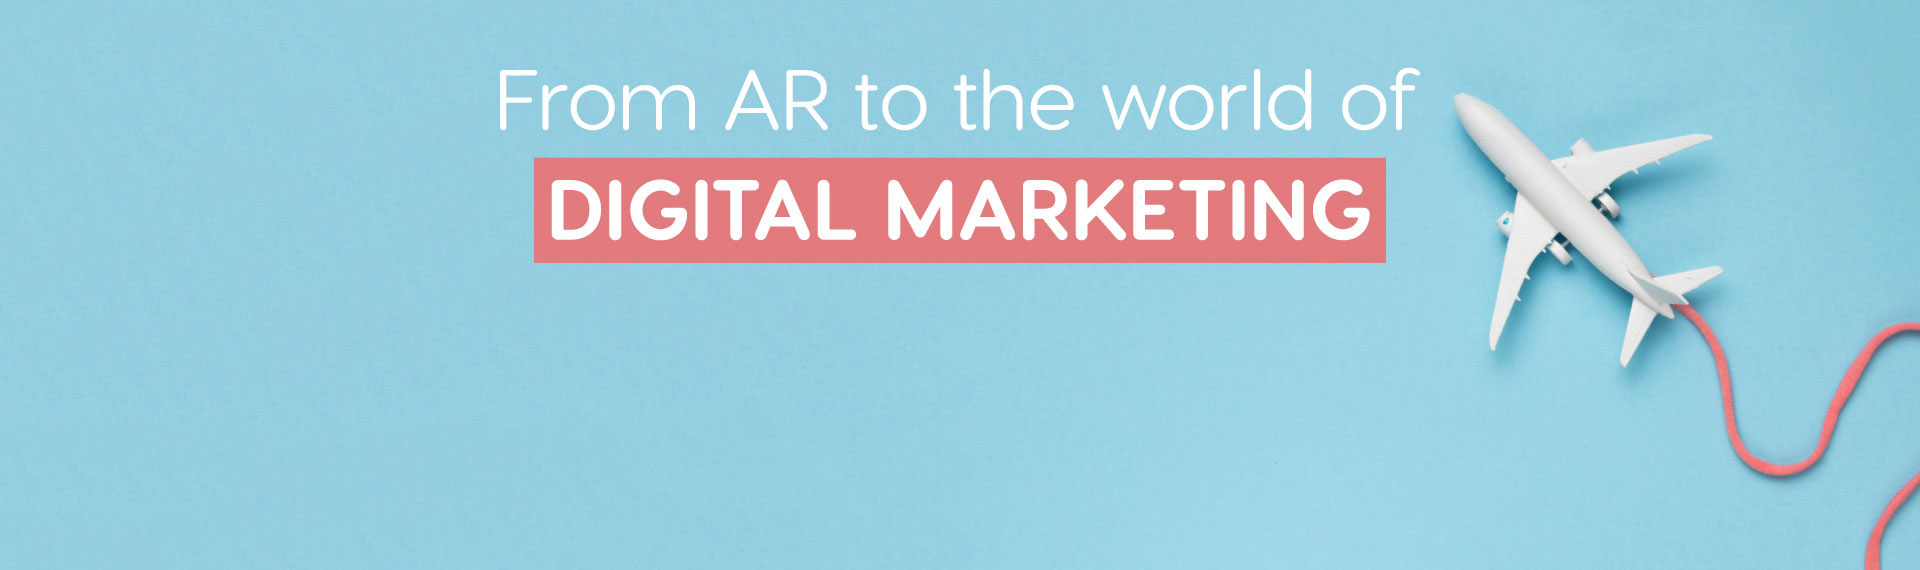 AR&digitalmarketing